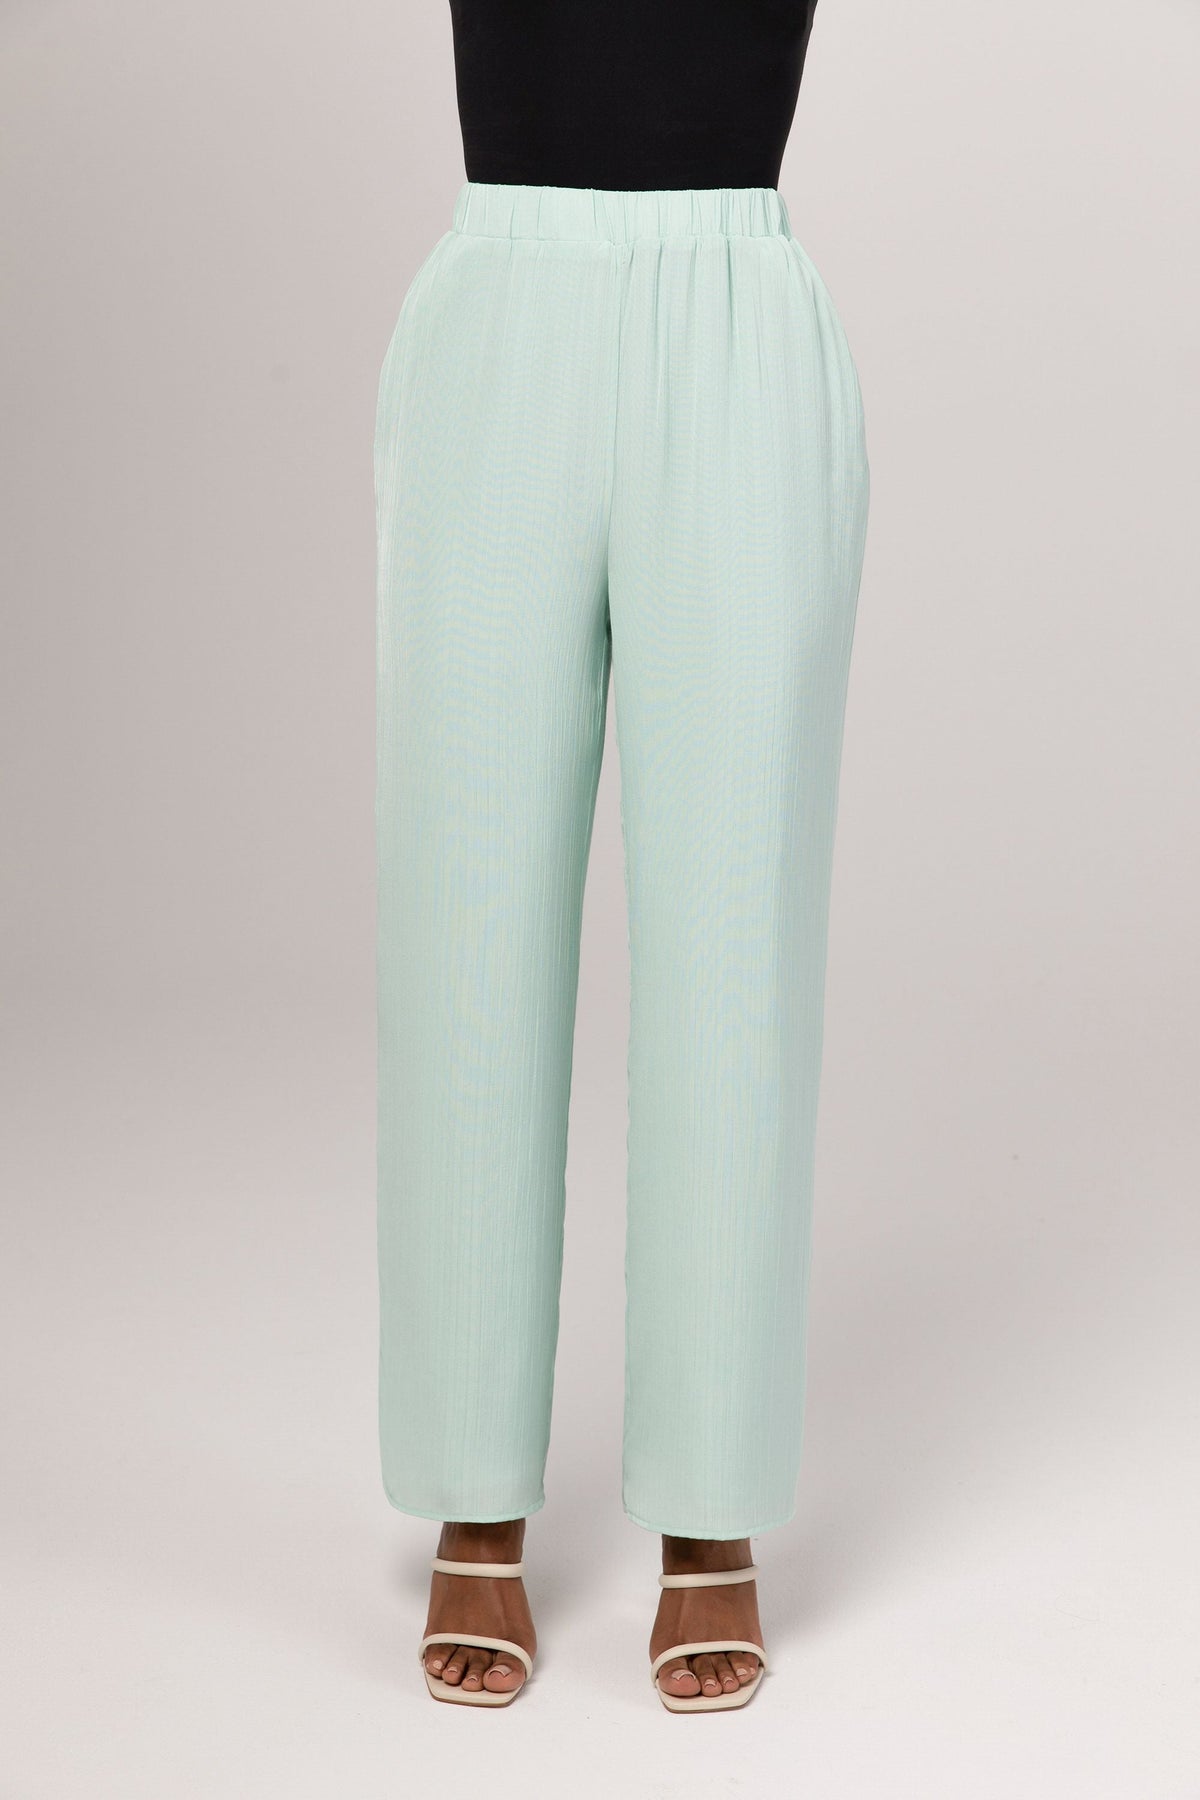 Nashwa Textured Rayon Wide Leg Pants - Mint Green Veiled 